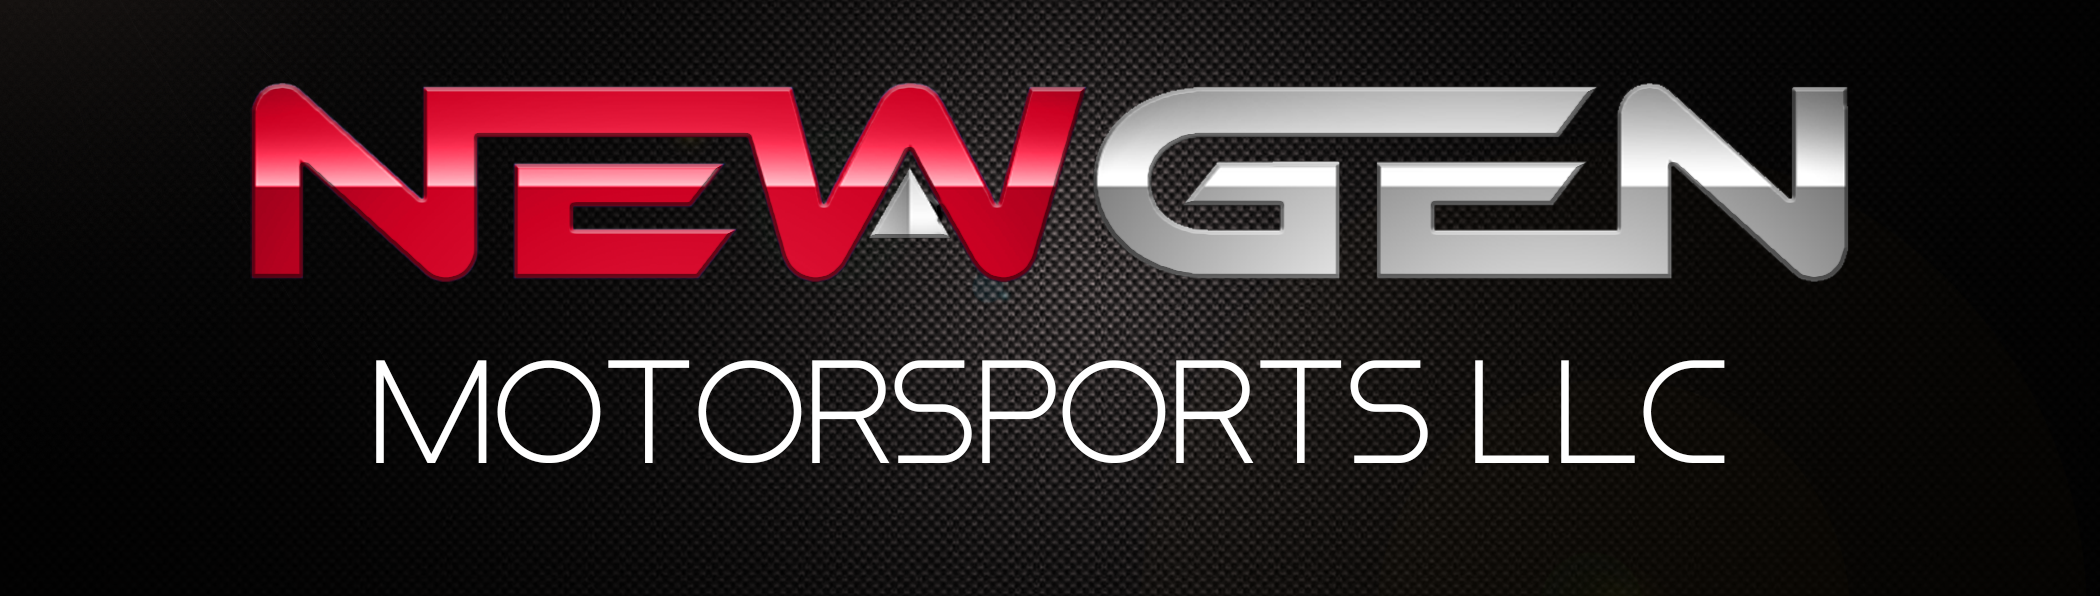 New Gen Motorsports LLC